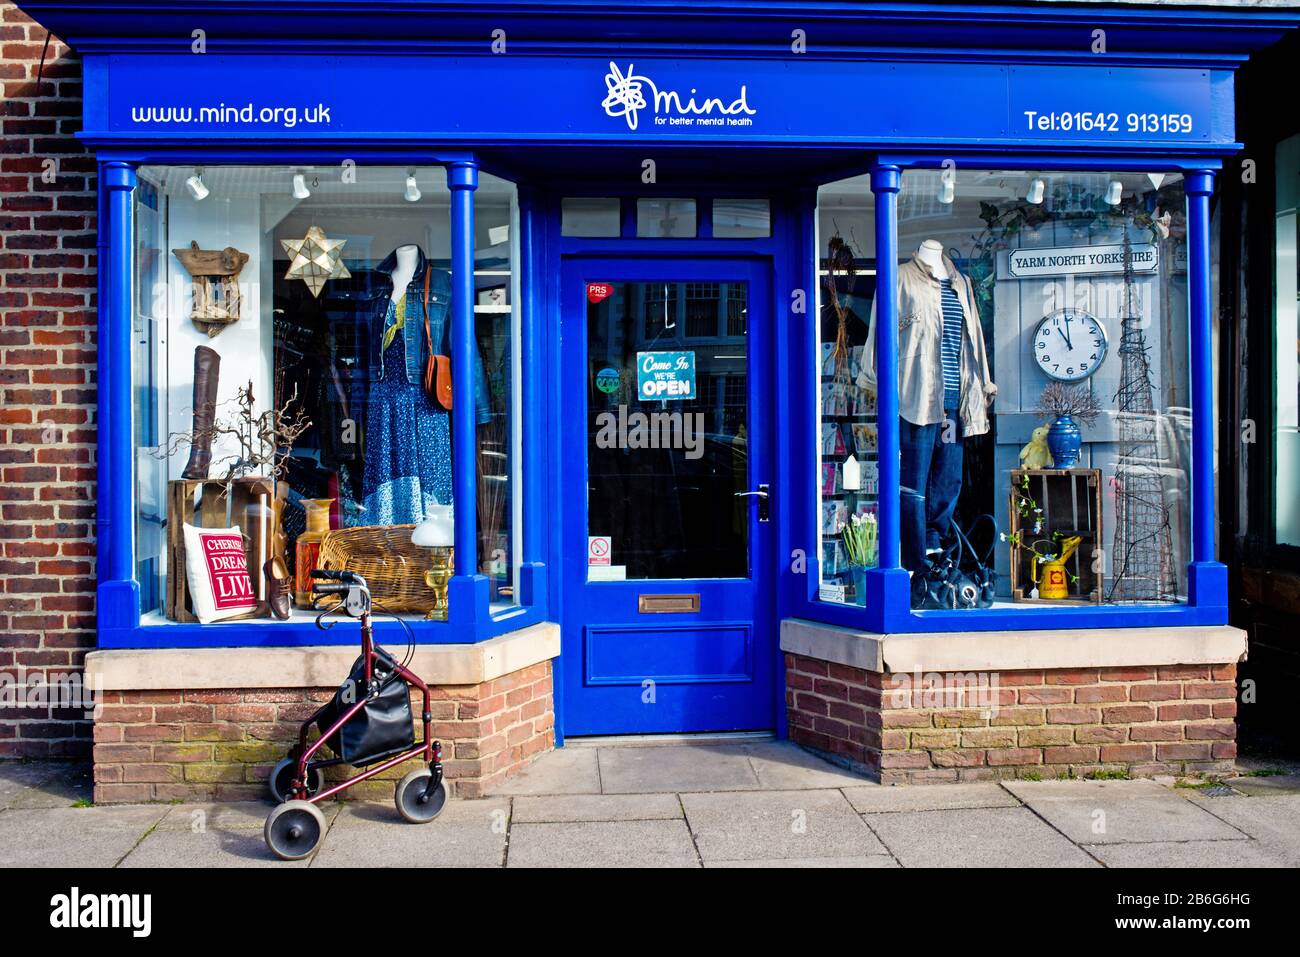 Mind Charity Shop, high street, Yarm on Tees, England Stock Photo